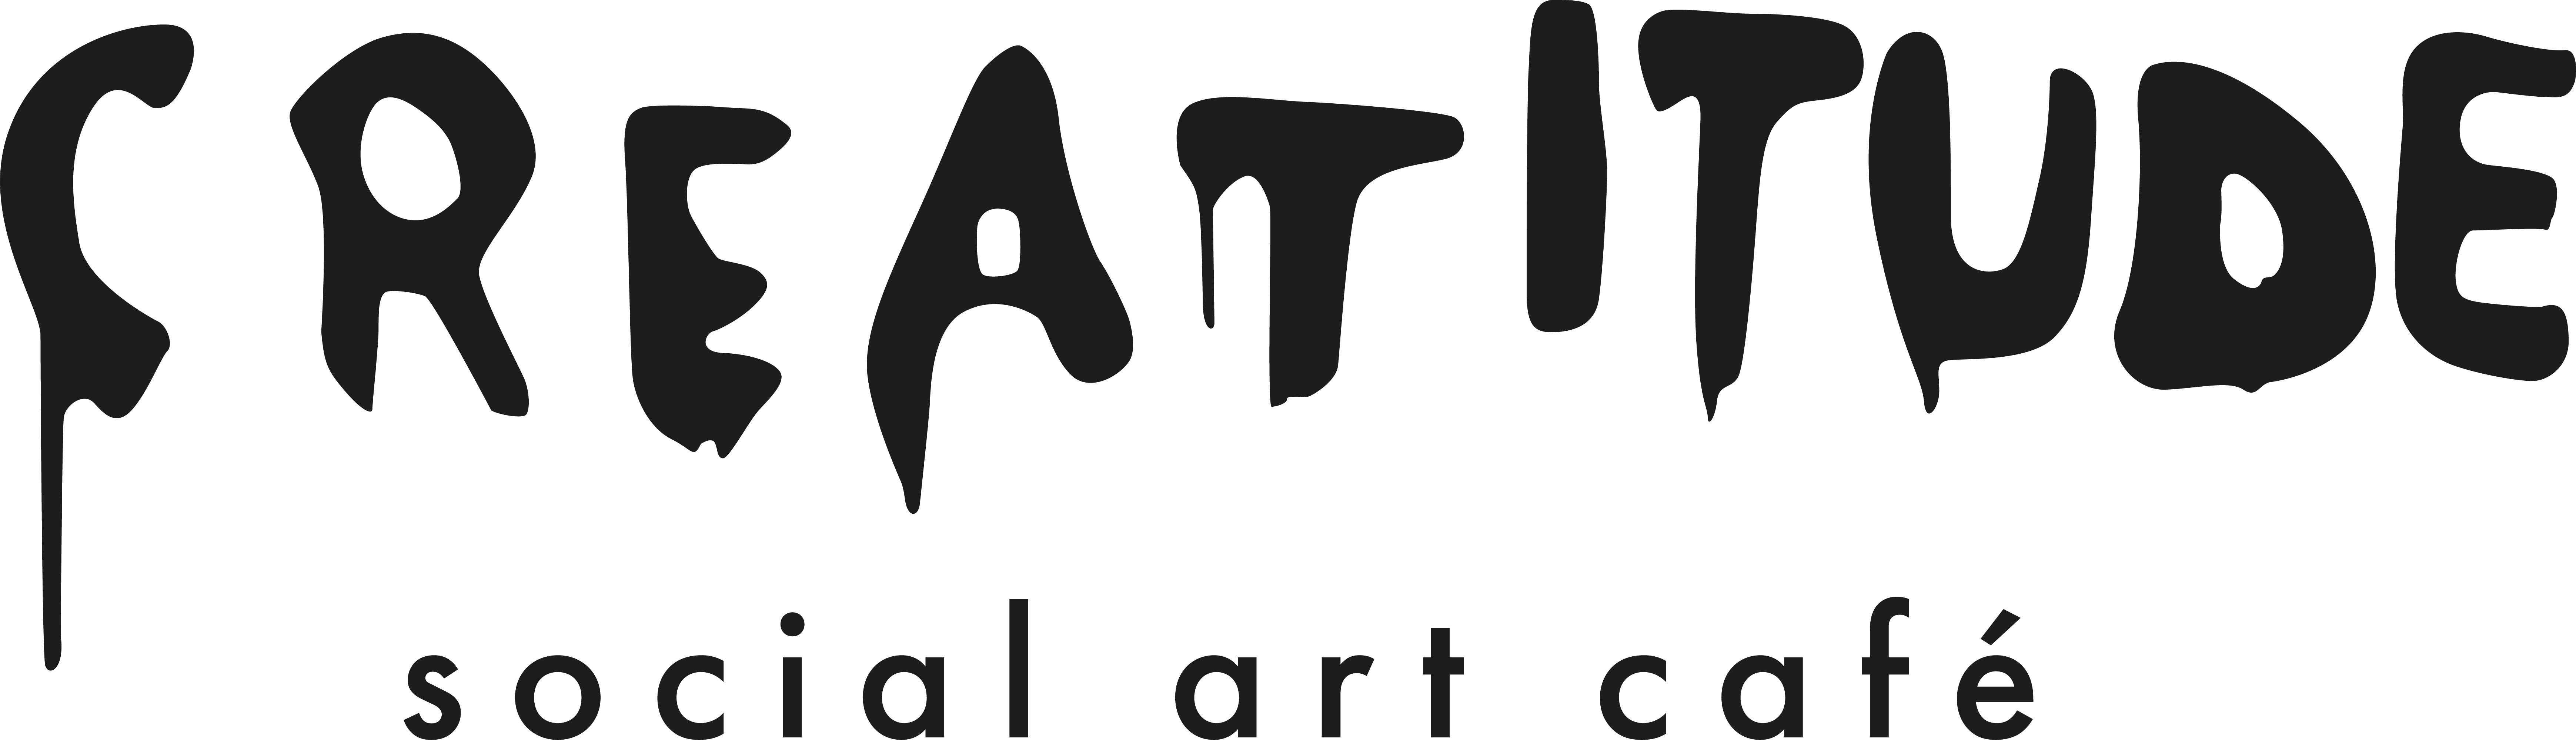 Logo_Creatitude